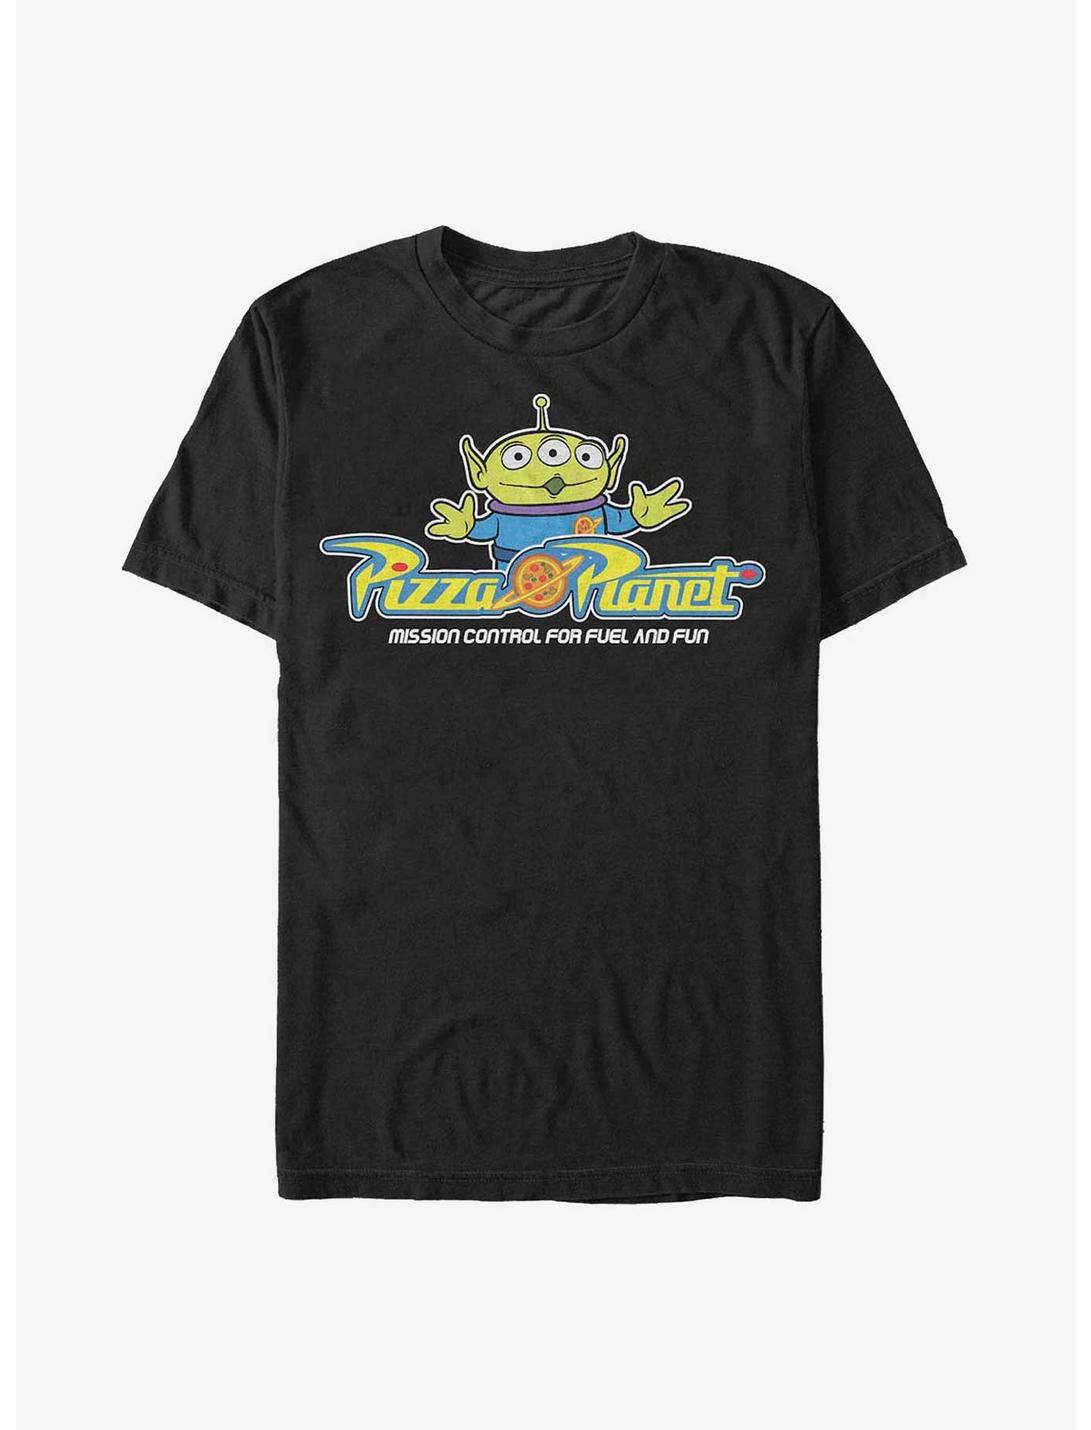 Disney Pixar Toy Story Pizza Planet For Fuel and Fun T-Shirt, BLACK, hi-res